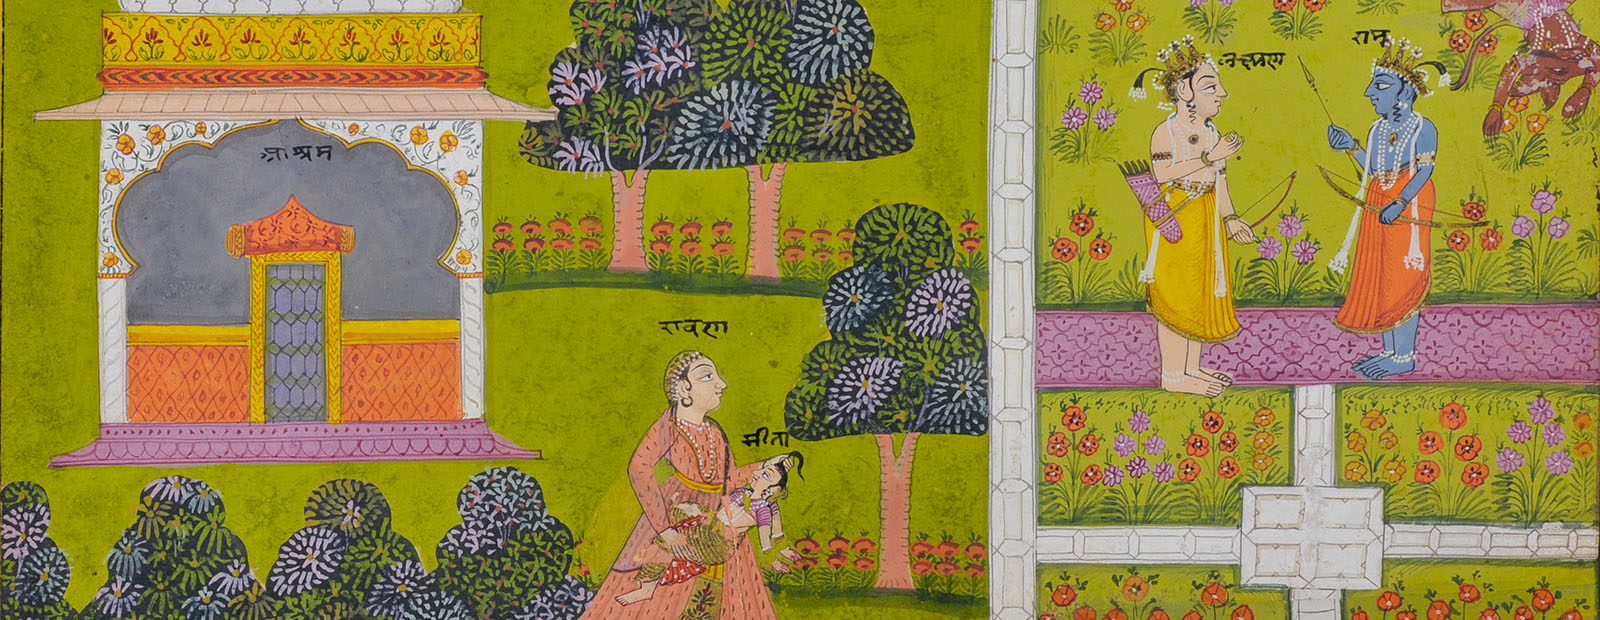 Sita is kidnapped by Ravana